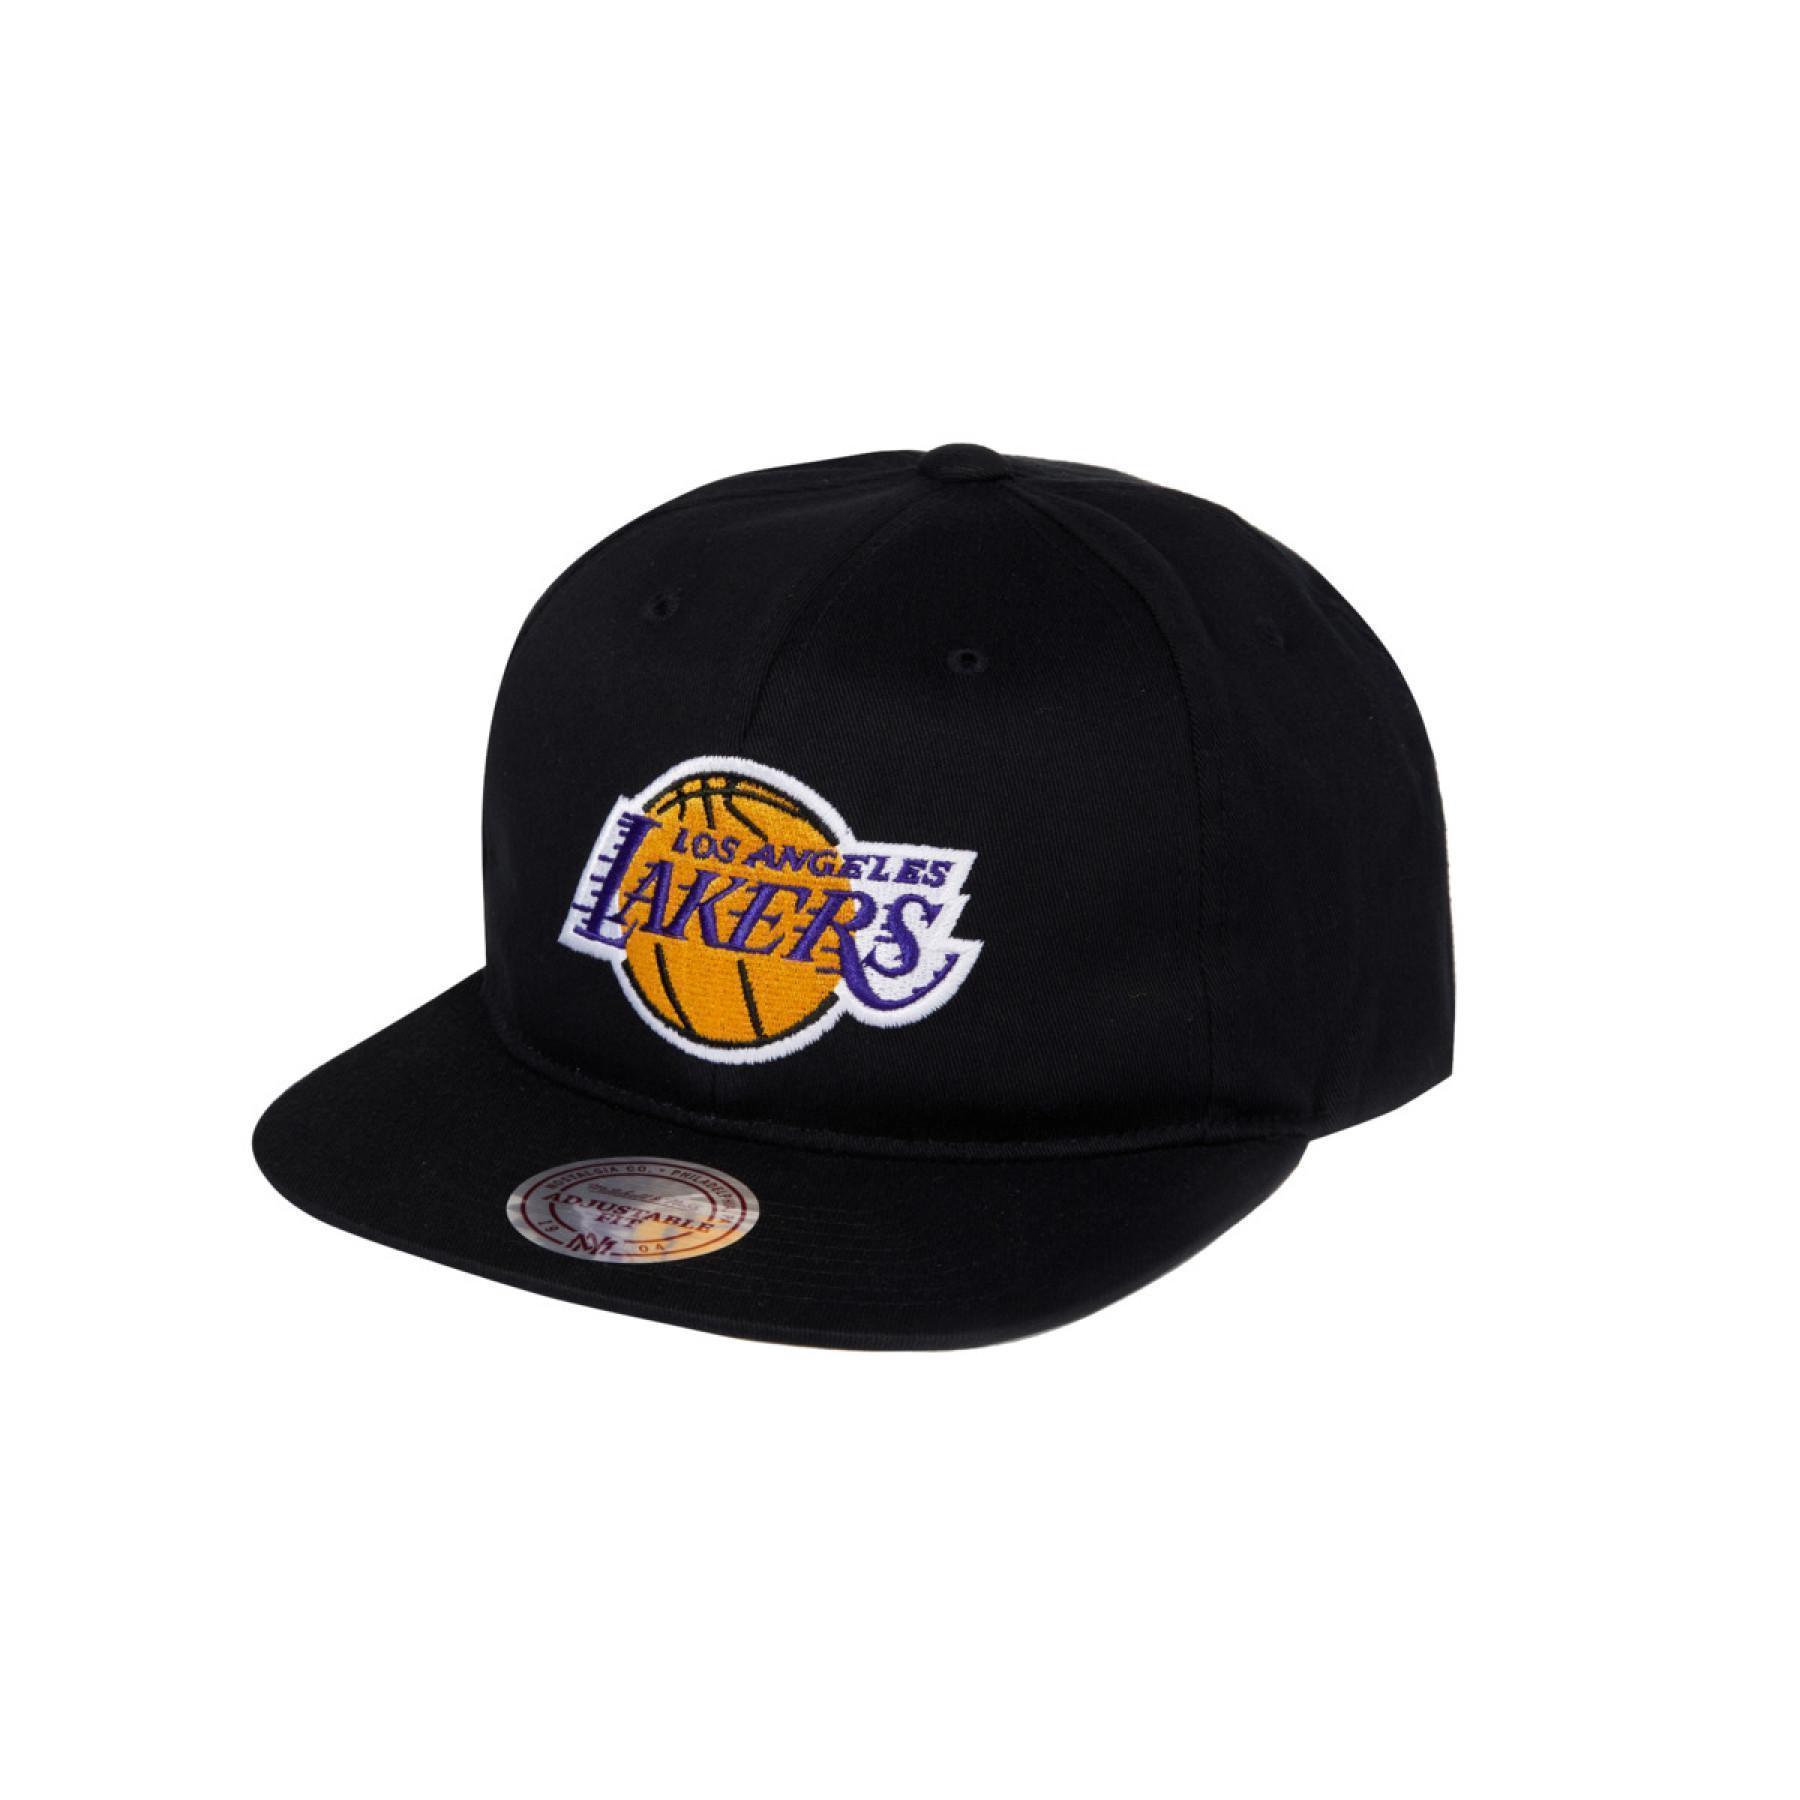 Pet Los Angeles Lakers team logo deadstock throwback